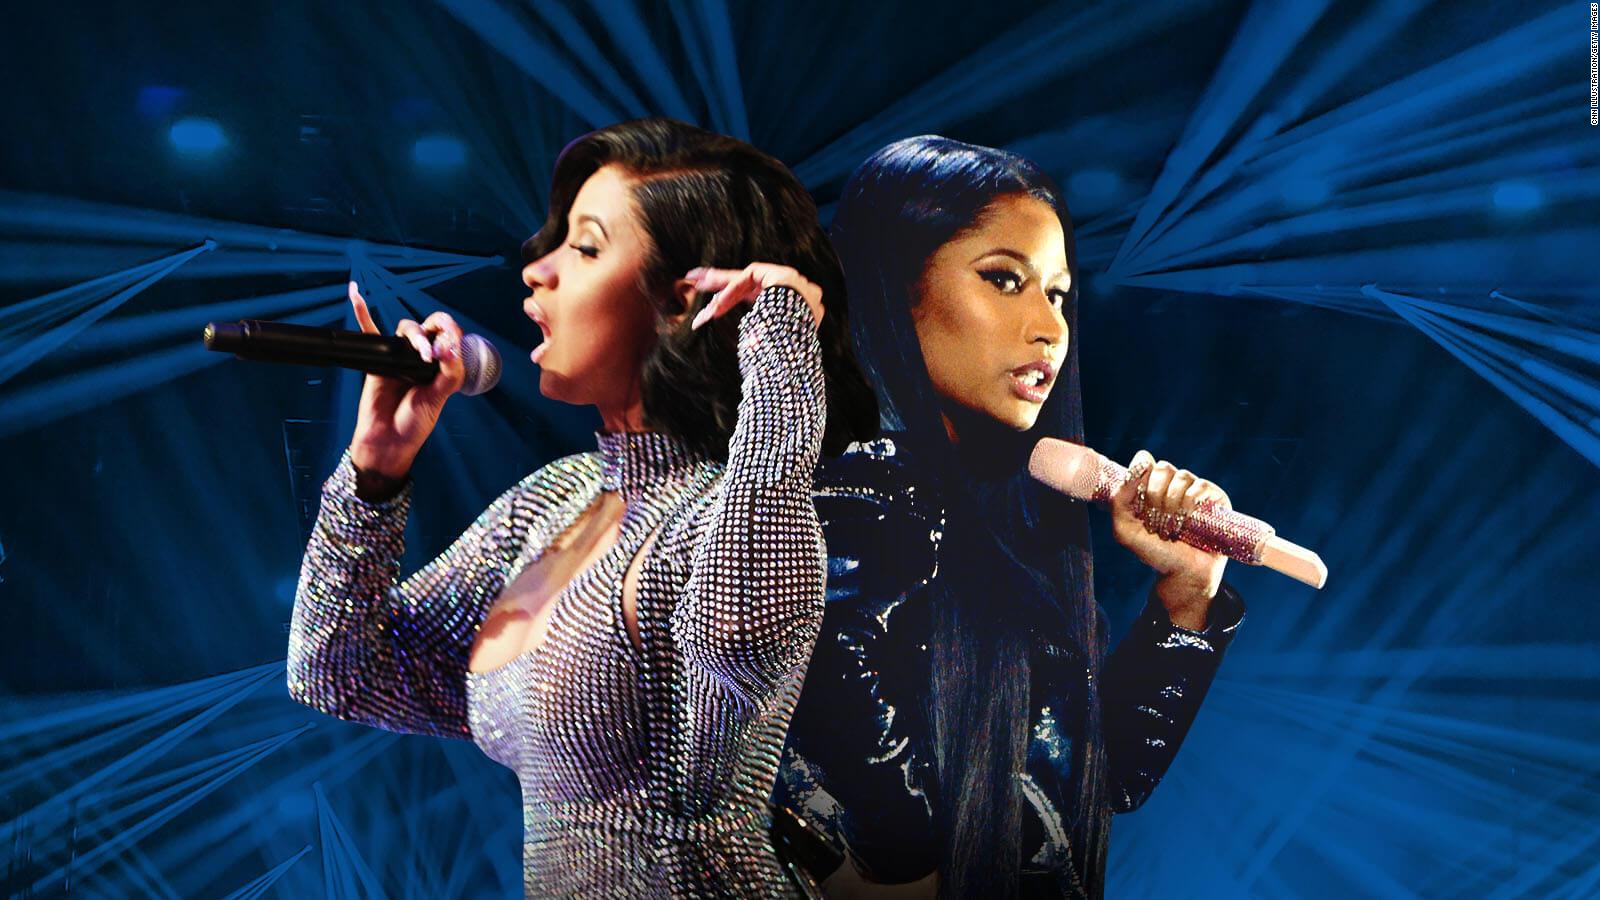 Grammys The Cardi B Nicki Minaj Debate Exposes An Insidious